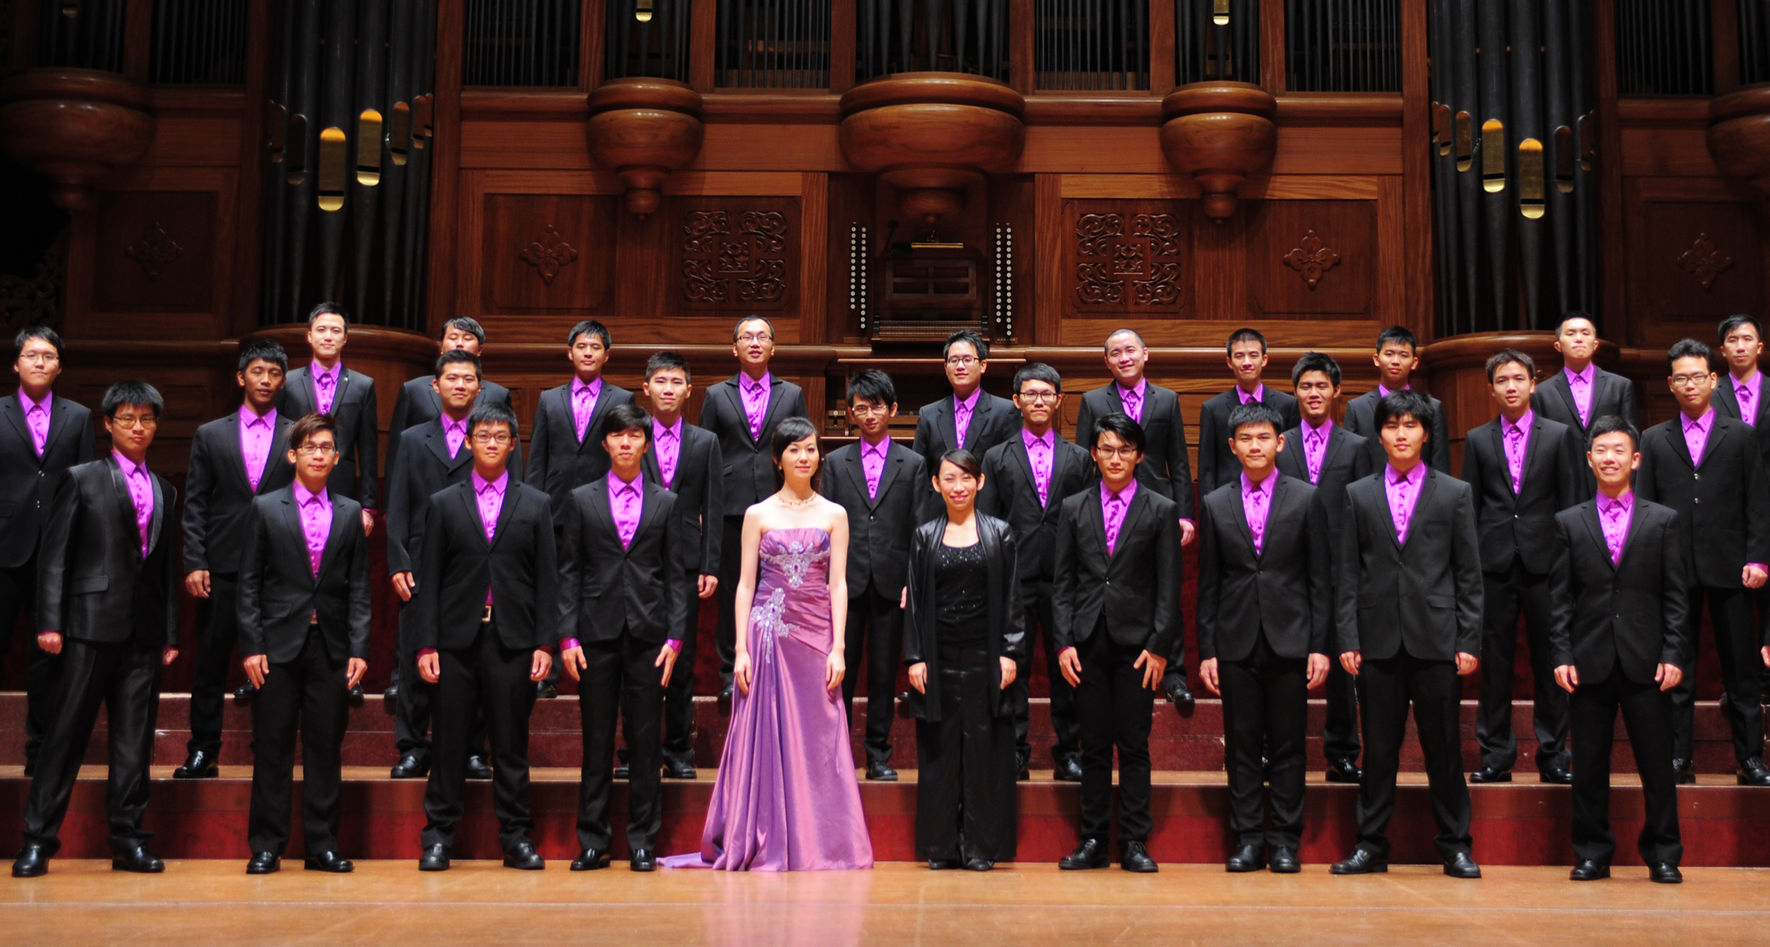 Winner of Johannes Brahms Choir Prize: The Müller Chamber Choir (Chinese Taipei)